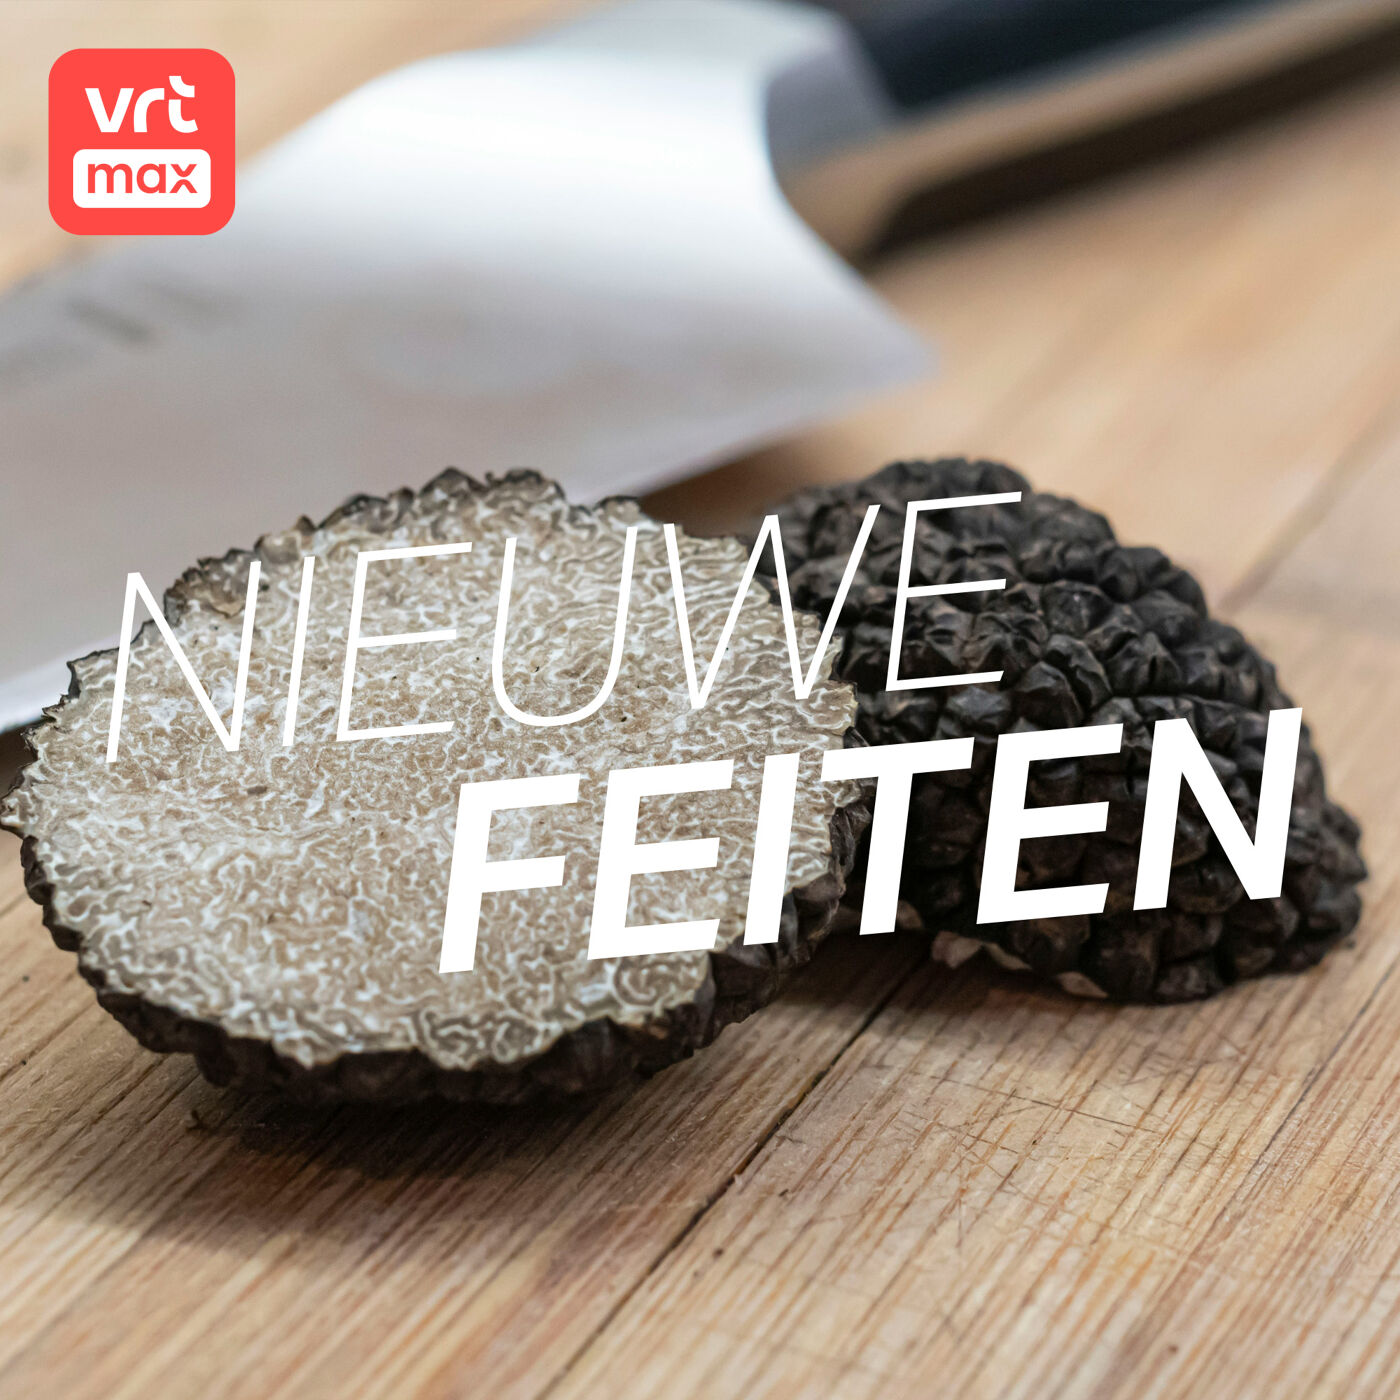 Je kan truffels perfect in België en Nederland kweken